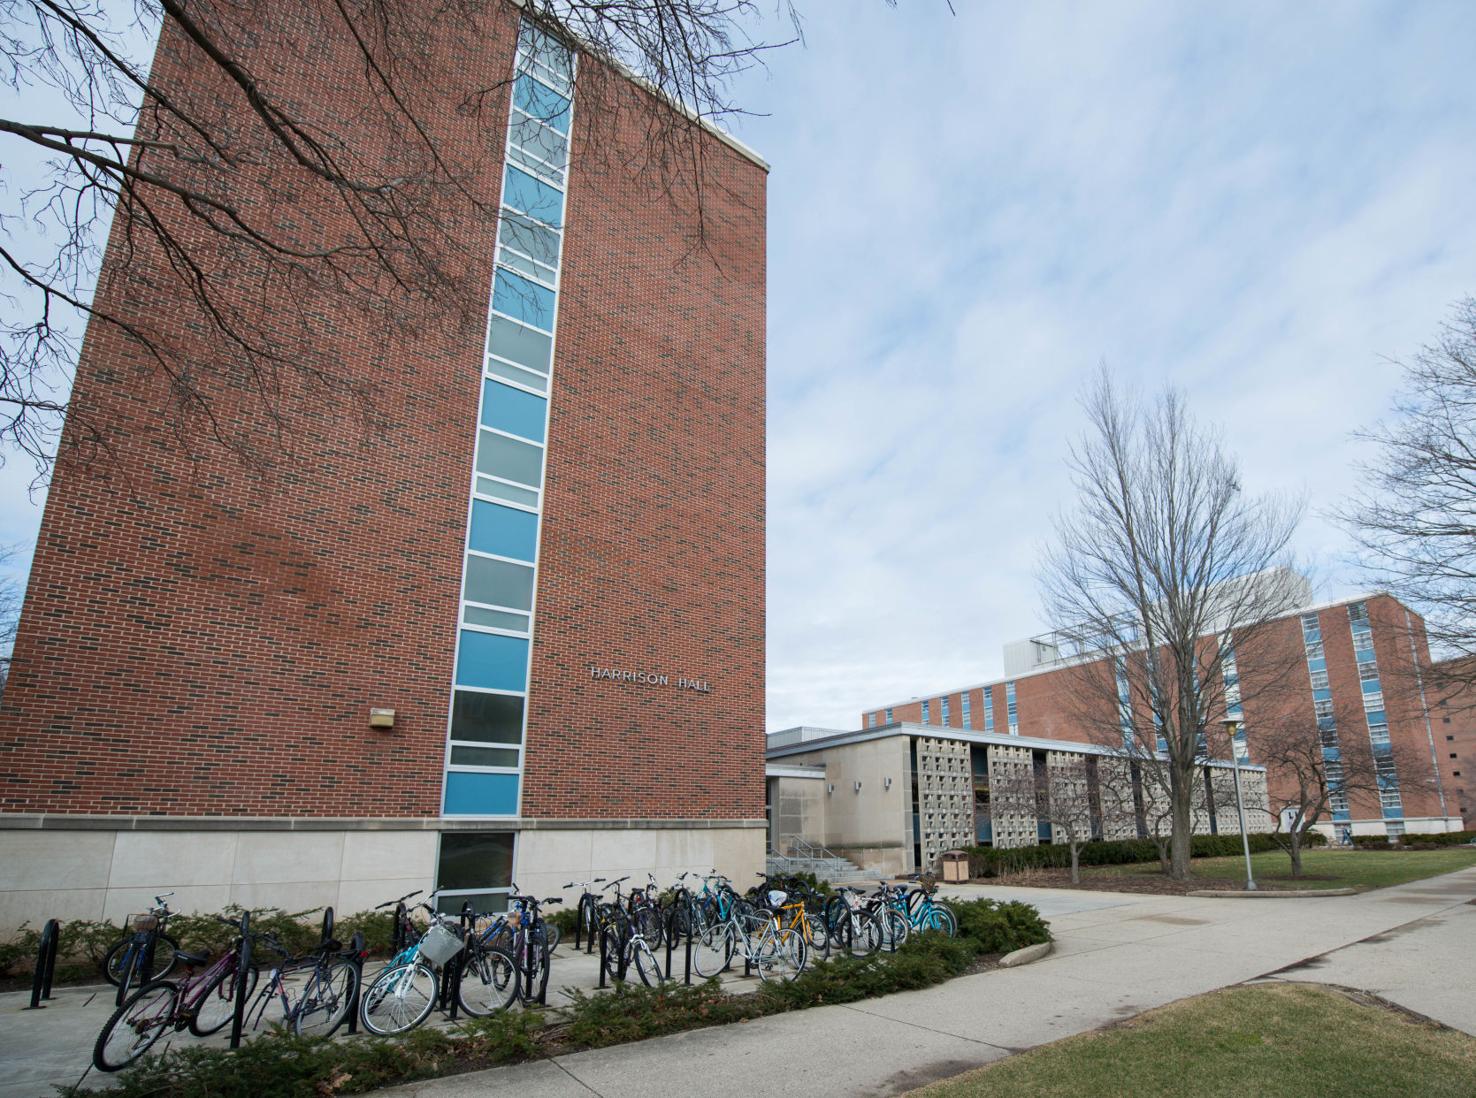 Purdue freshman charged after allegedly stealing underwear Campus